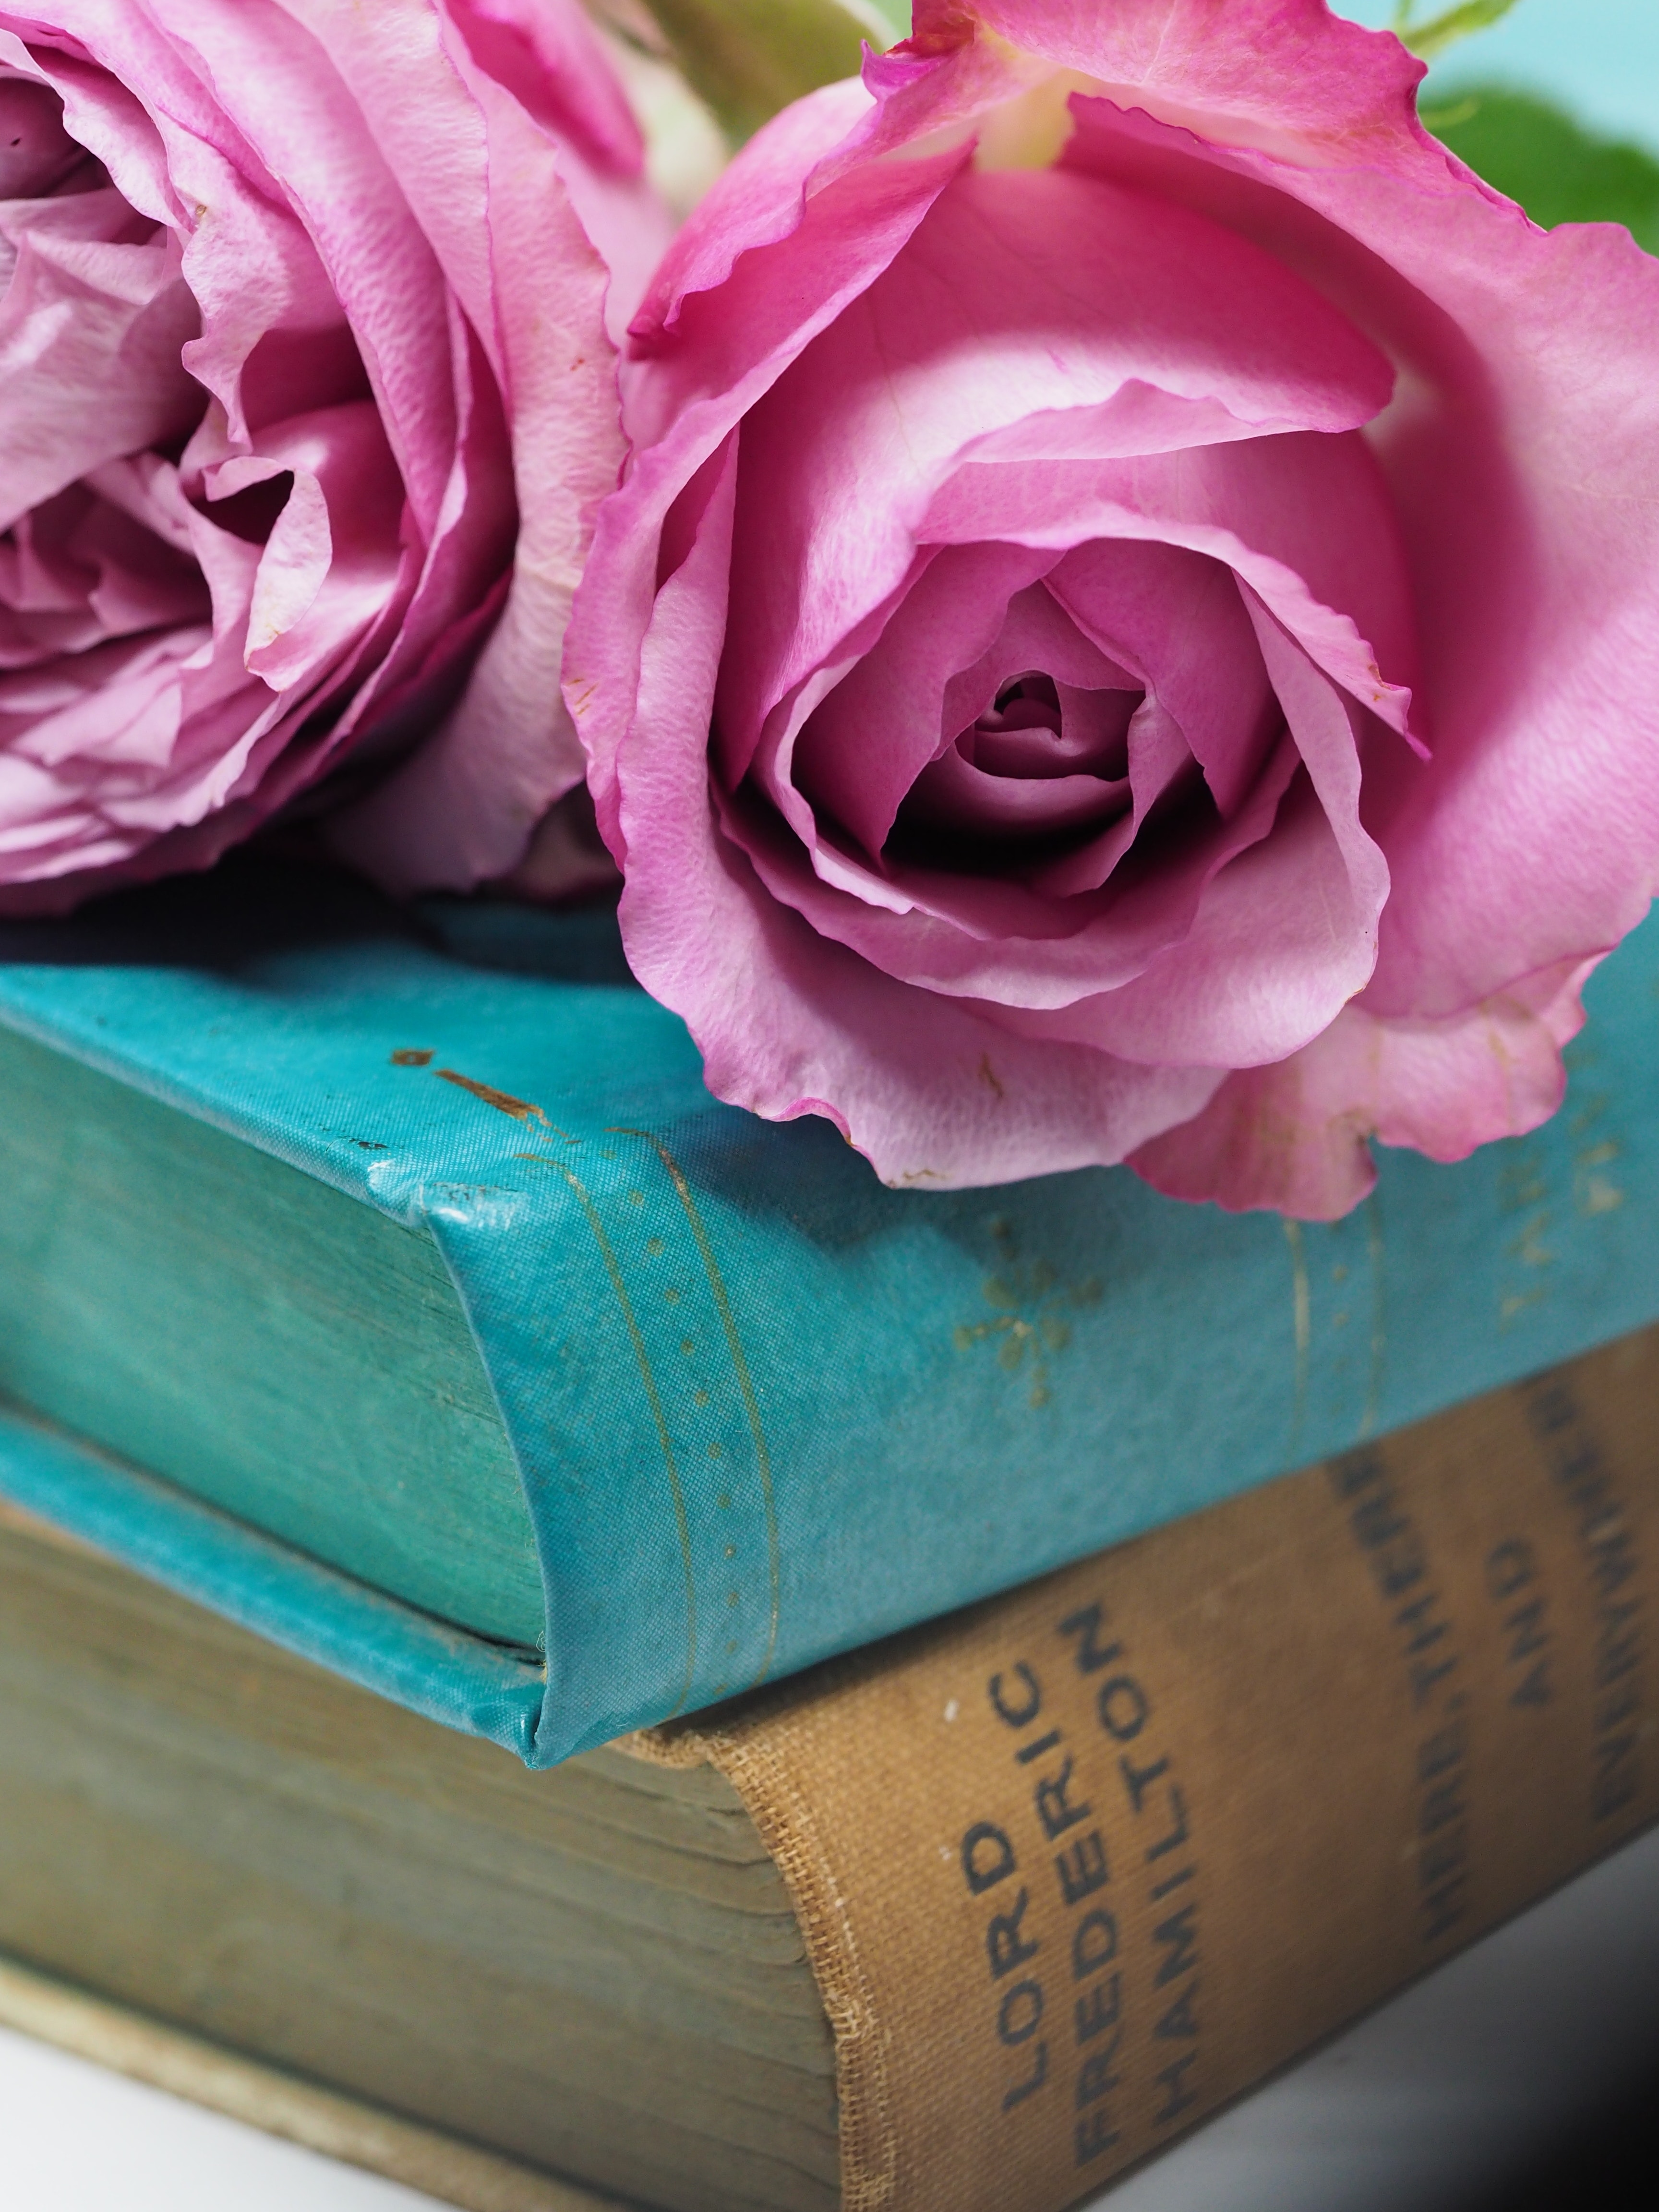 Pink rose flower on blue hardbound books photo